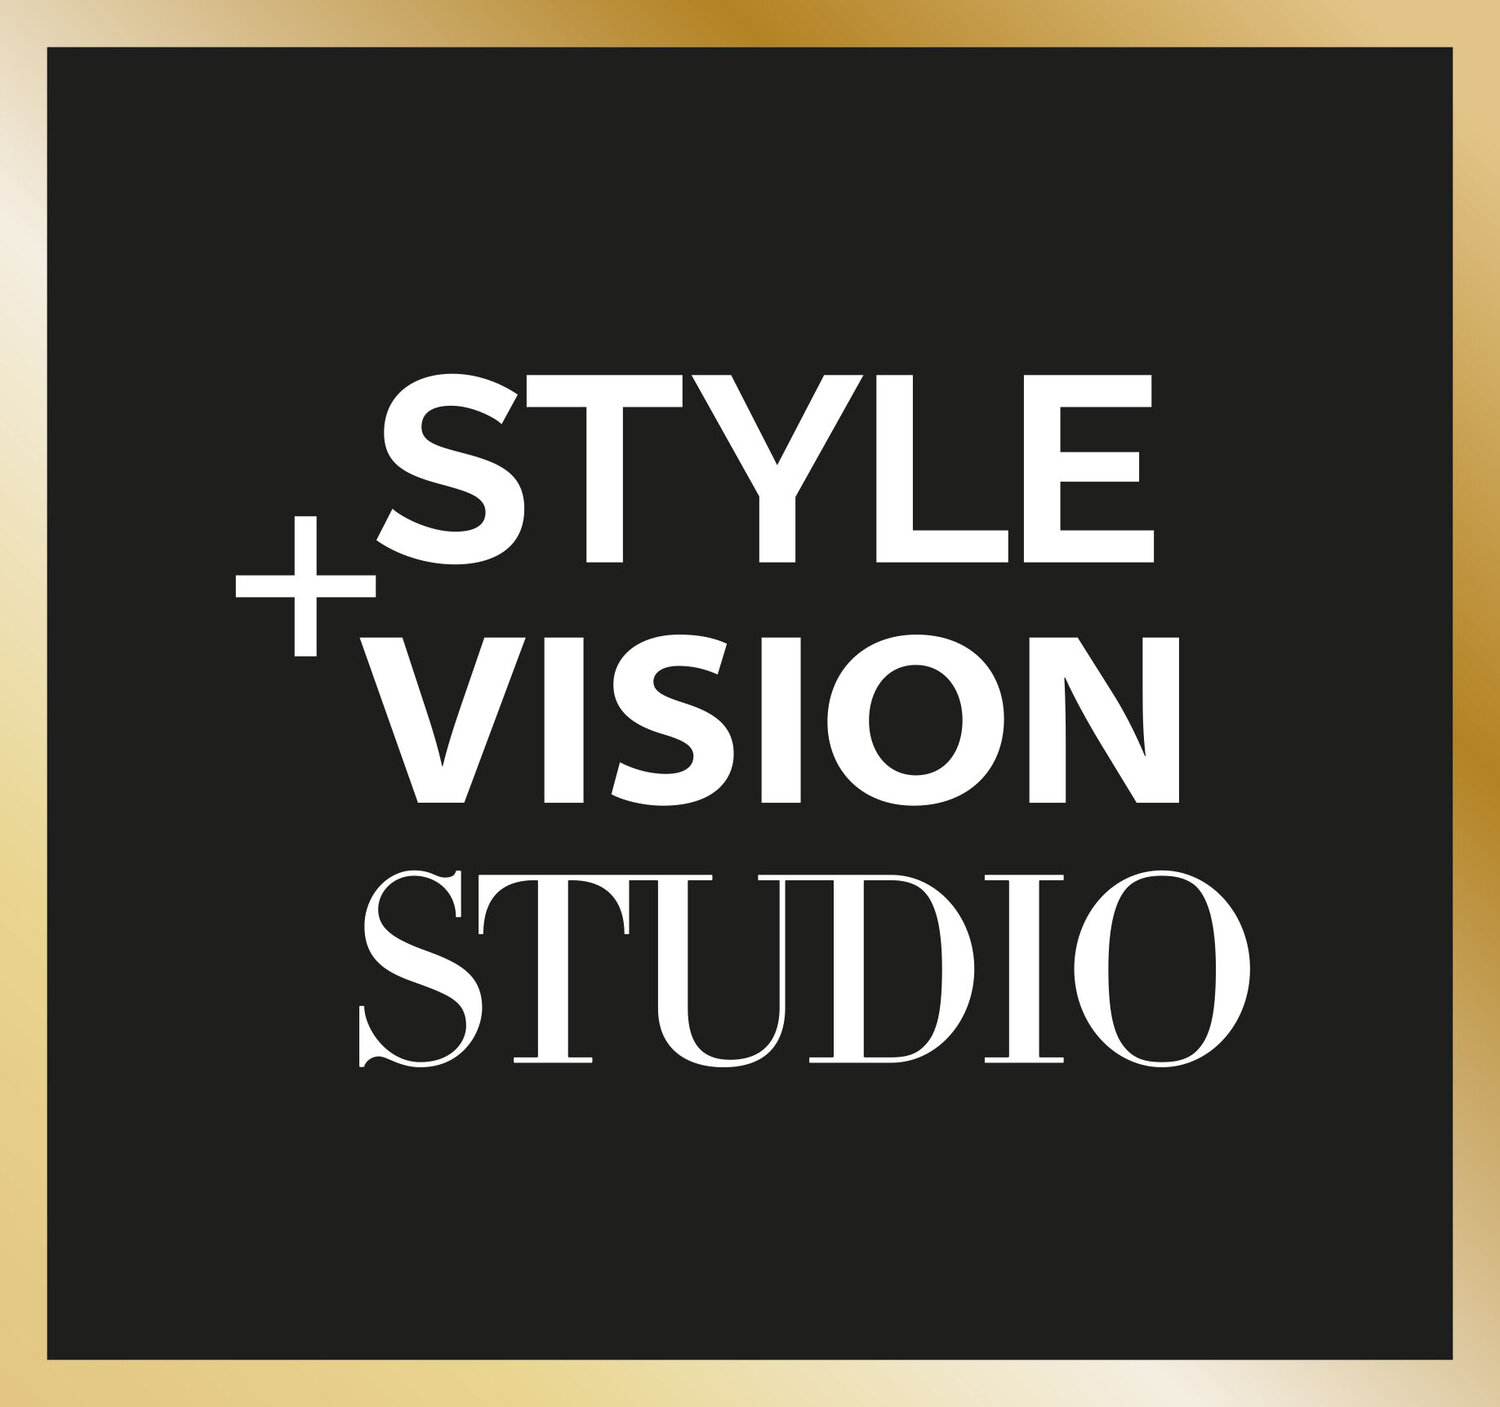 STYLE + VISION STUDIO